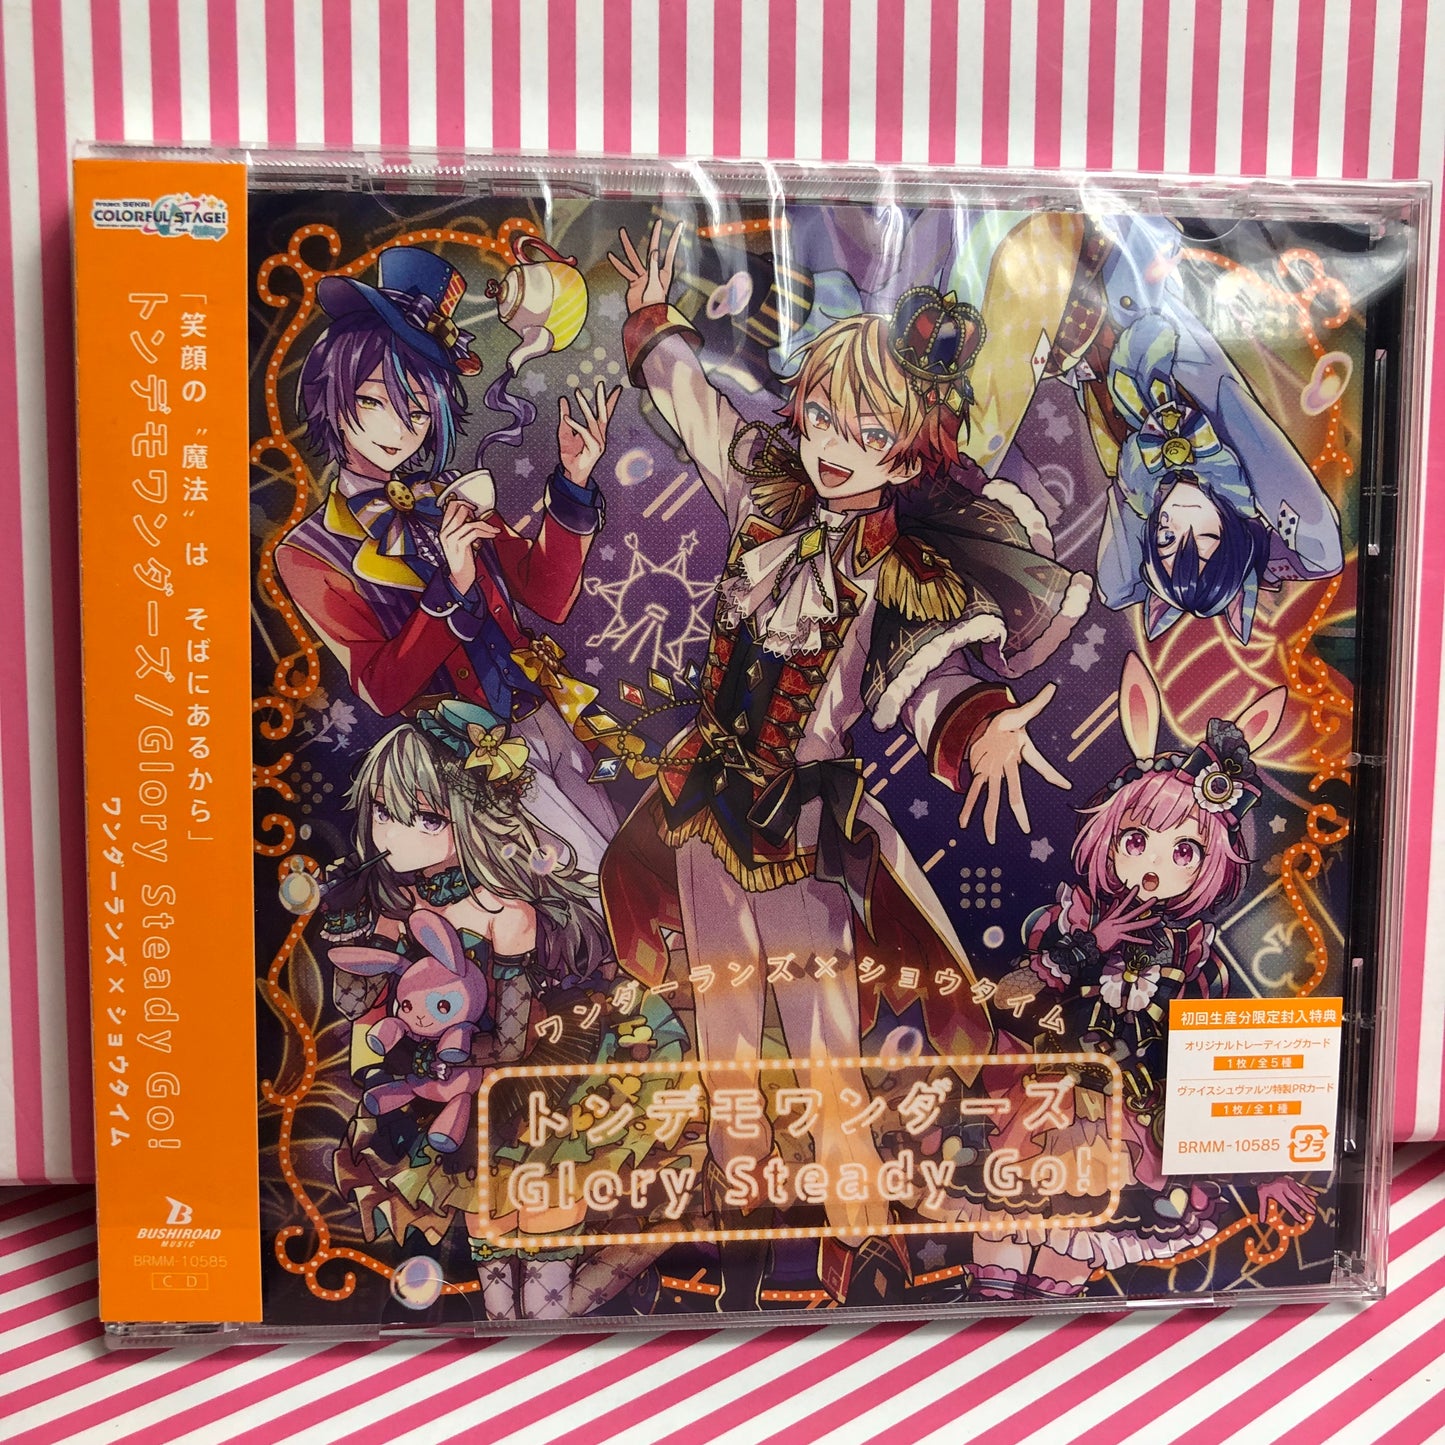 Wonderlands x Showtime - Tondemo Wonderz / Glory Steady Go! Single CD Project Sekai Colorful Stage! ft. Hatsune Miku